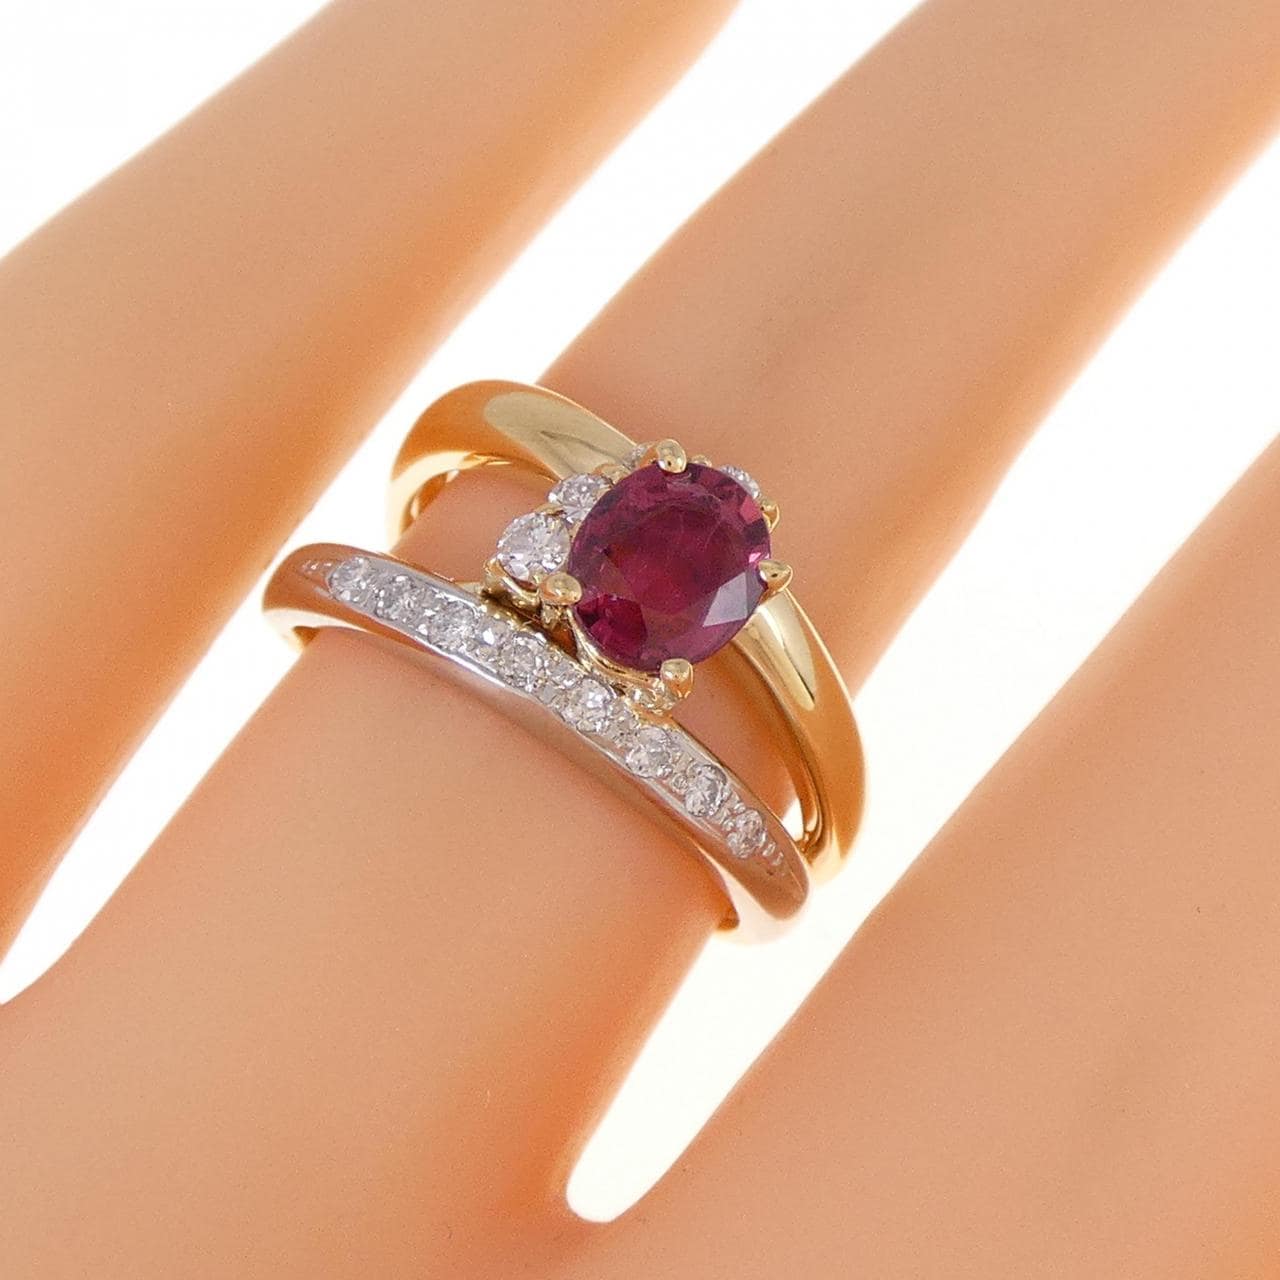 KOMEHYO|K18YG/PT Ruby Ring|Jewelry|Ring|【Official】KOMEHYO, one ...